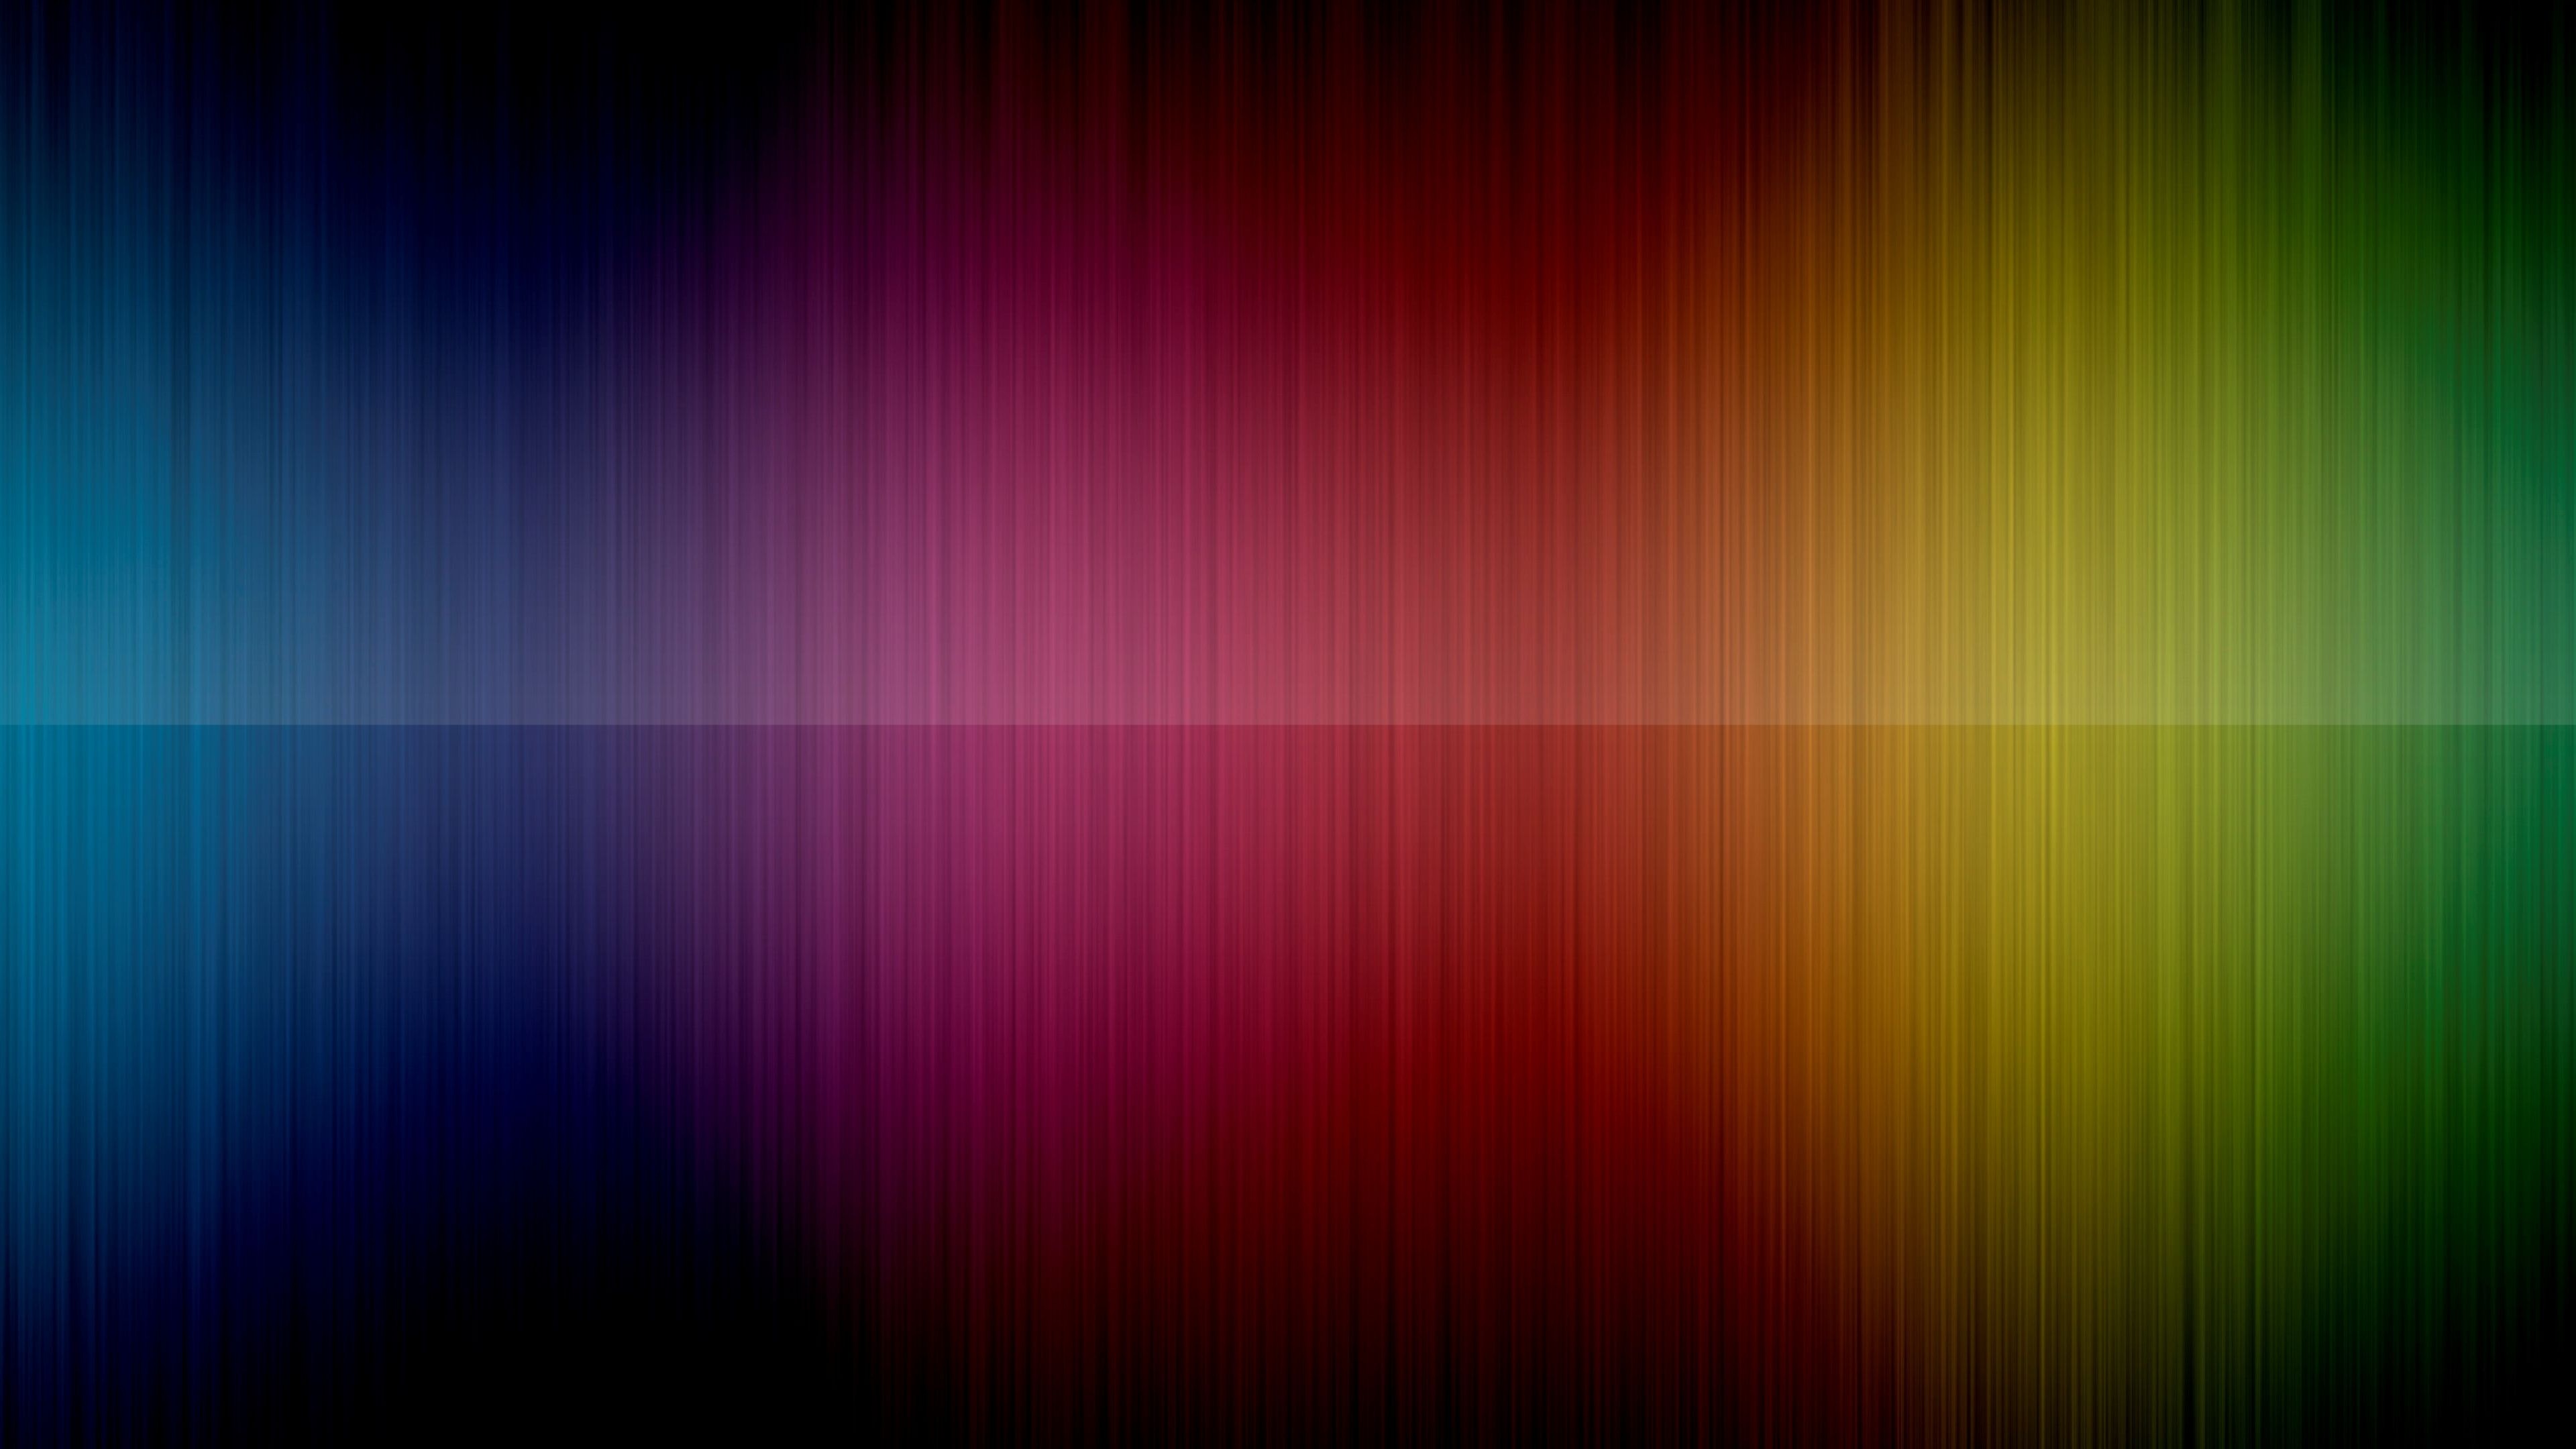 Rainbow Windows wallpapers, Colorful computer backgrounds, Windows desktop customization, Vibrant and lively, 3840x2160 4K Desktop